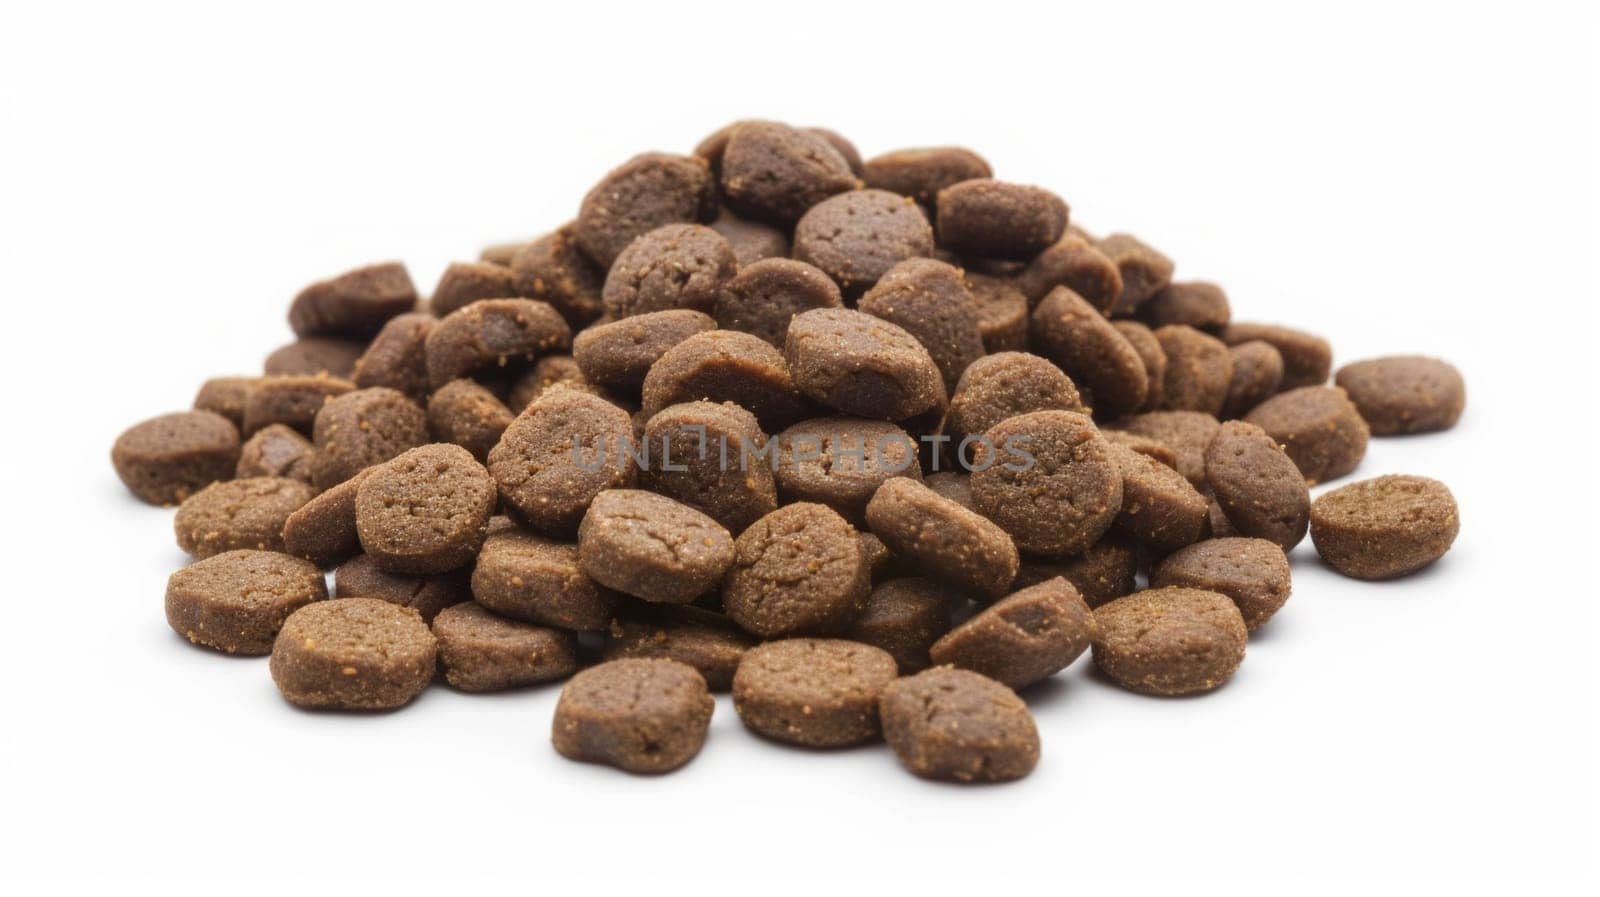 Pile of dry dog food isolated on white background.